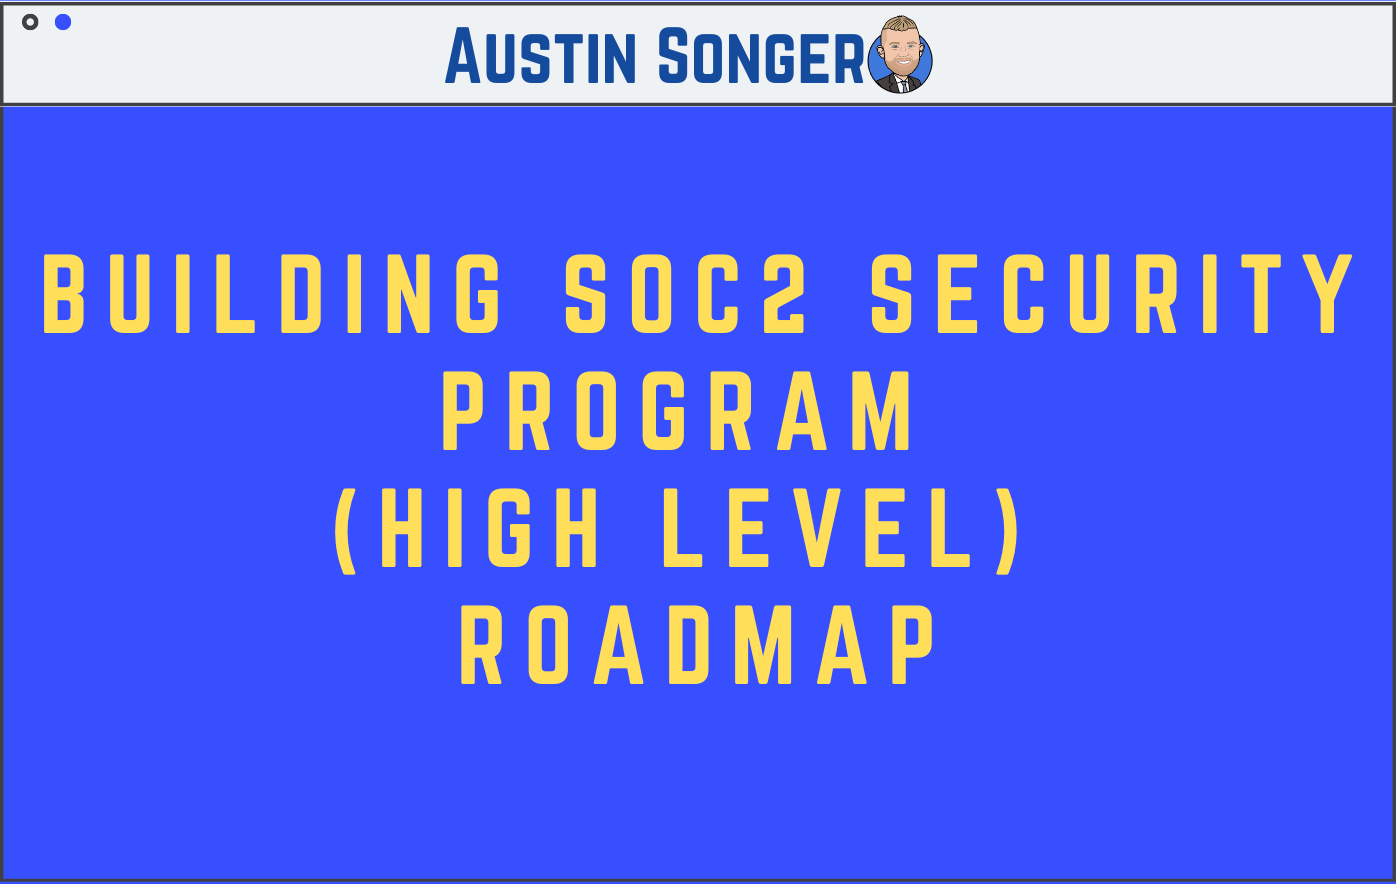 Building SOC2 Security Program (High Level) Roadmap